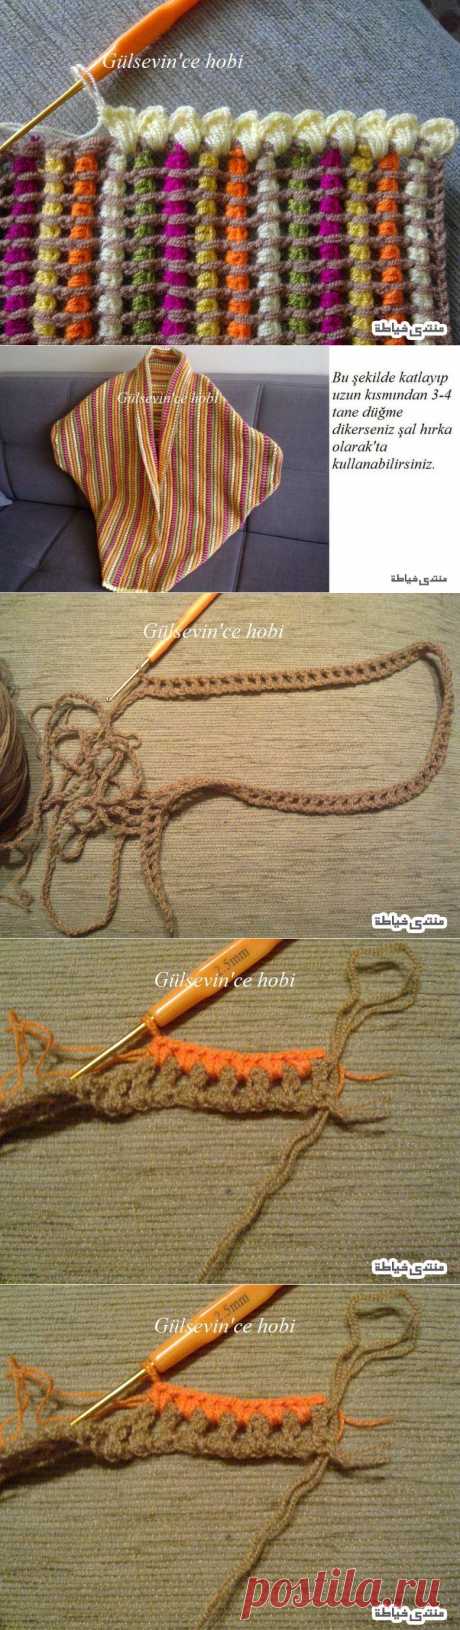 Irish crochet &amp;: Интересный узор крючком